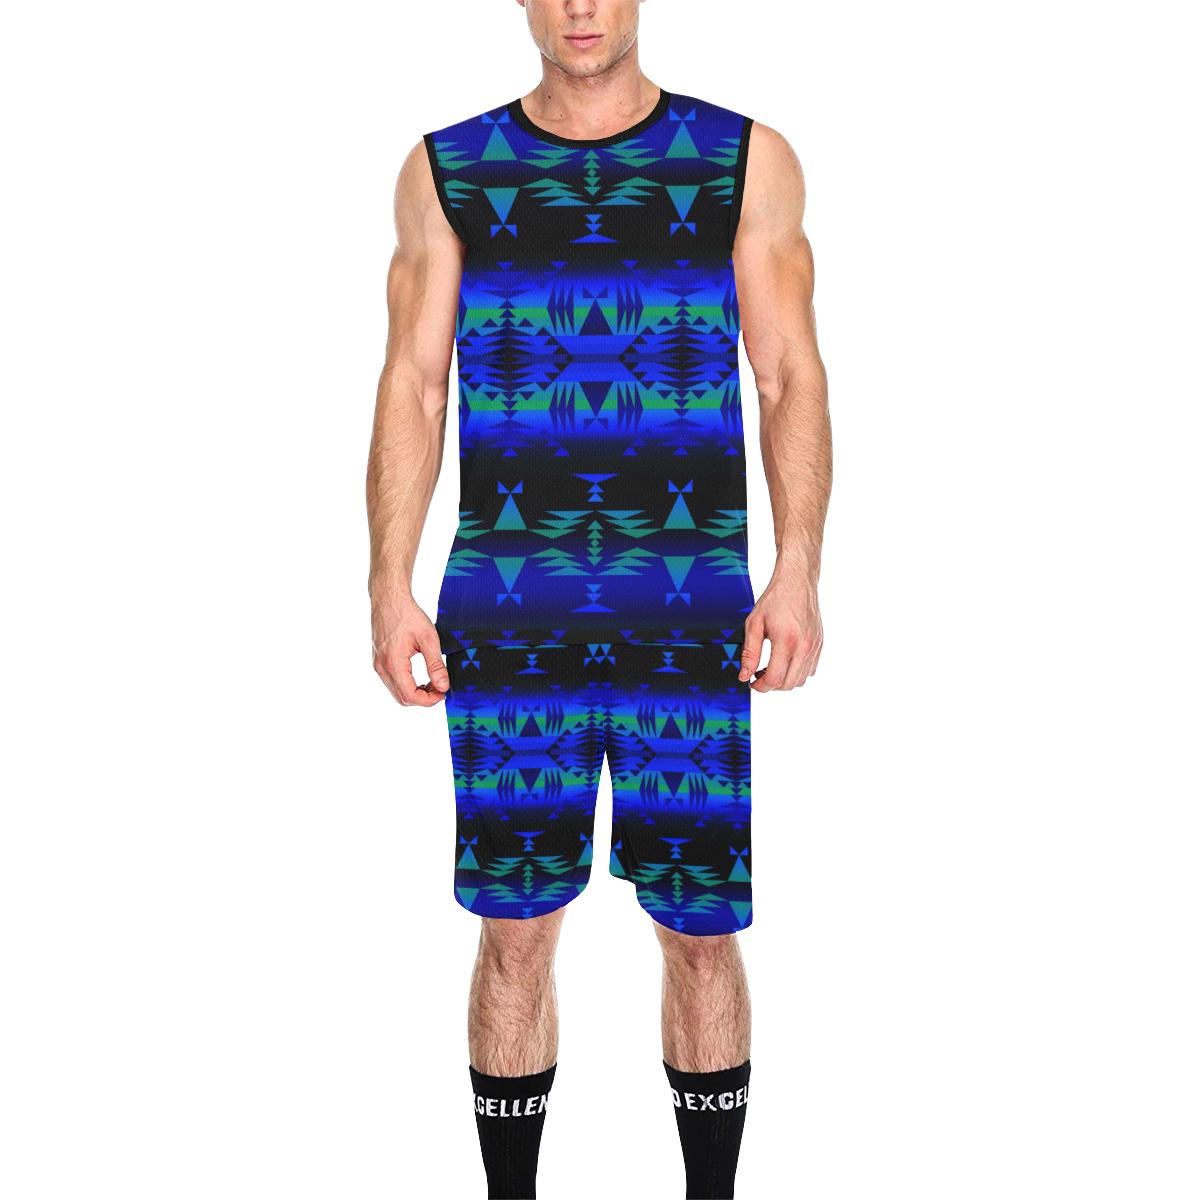 Between the Blue Ridge Mountains All Over Print Basketball Uniform Basketball Uniform e-joyer 